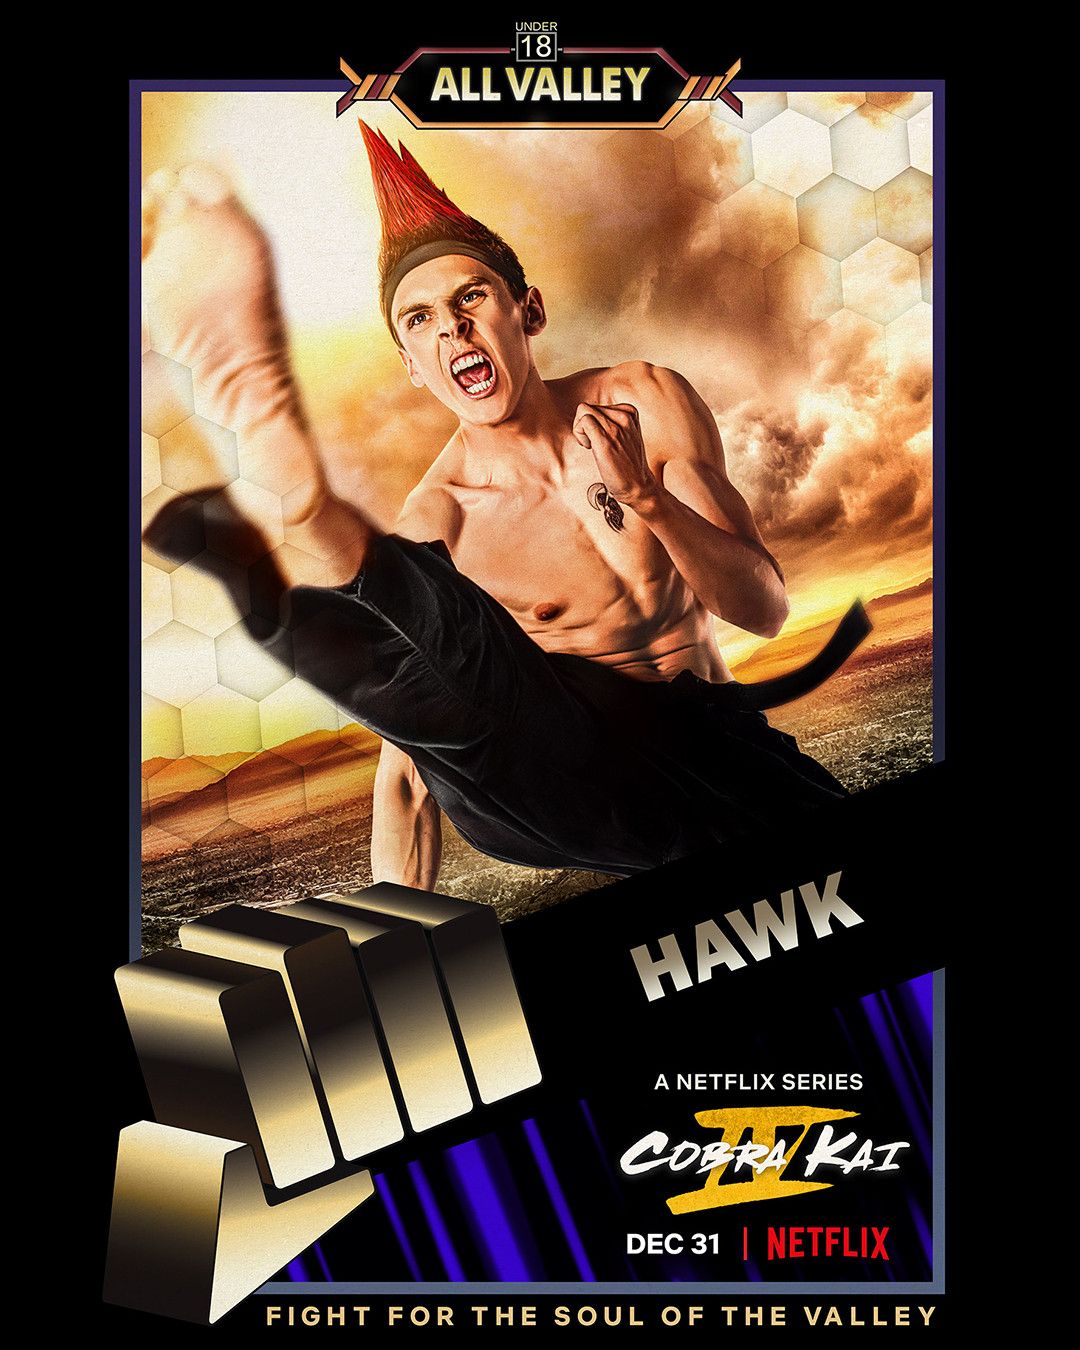 Hawk Cobra Kai character poster